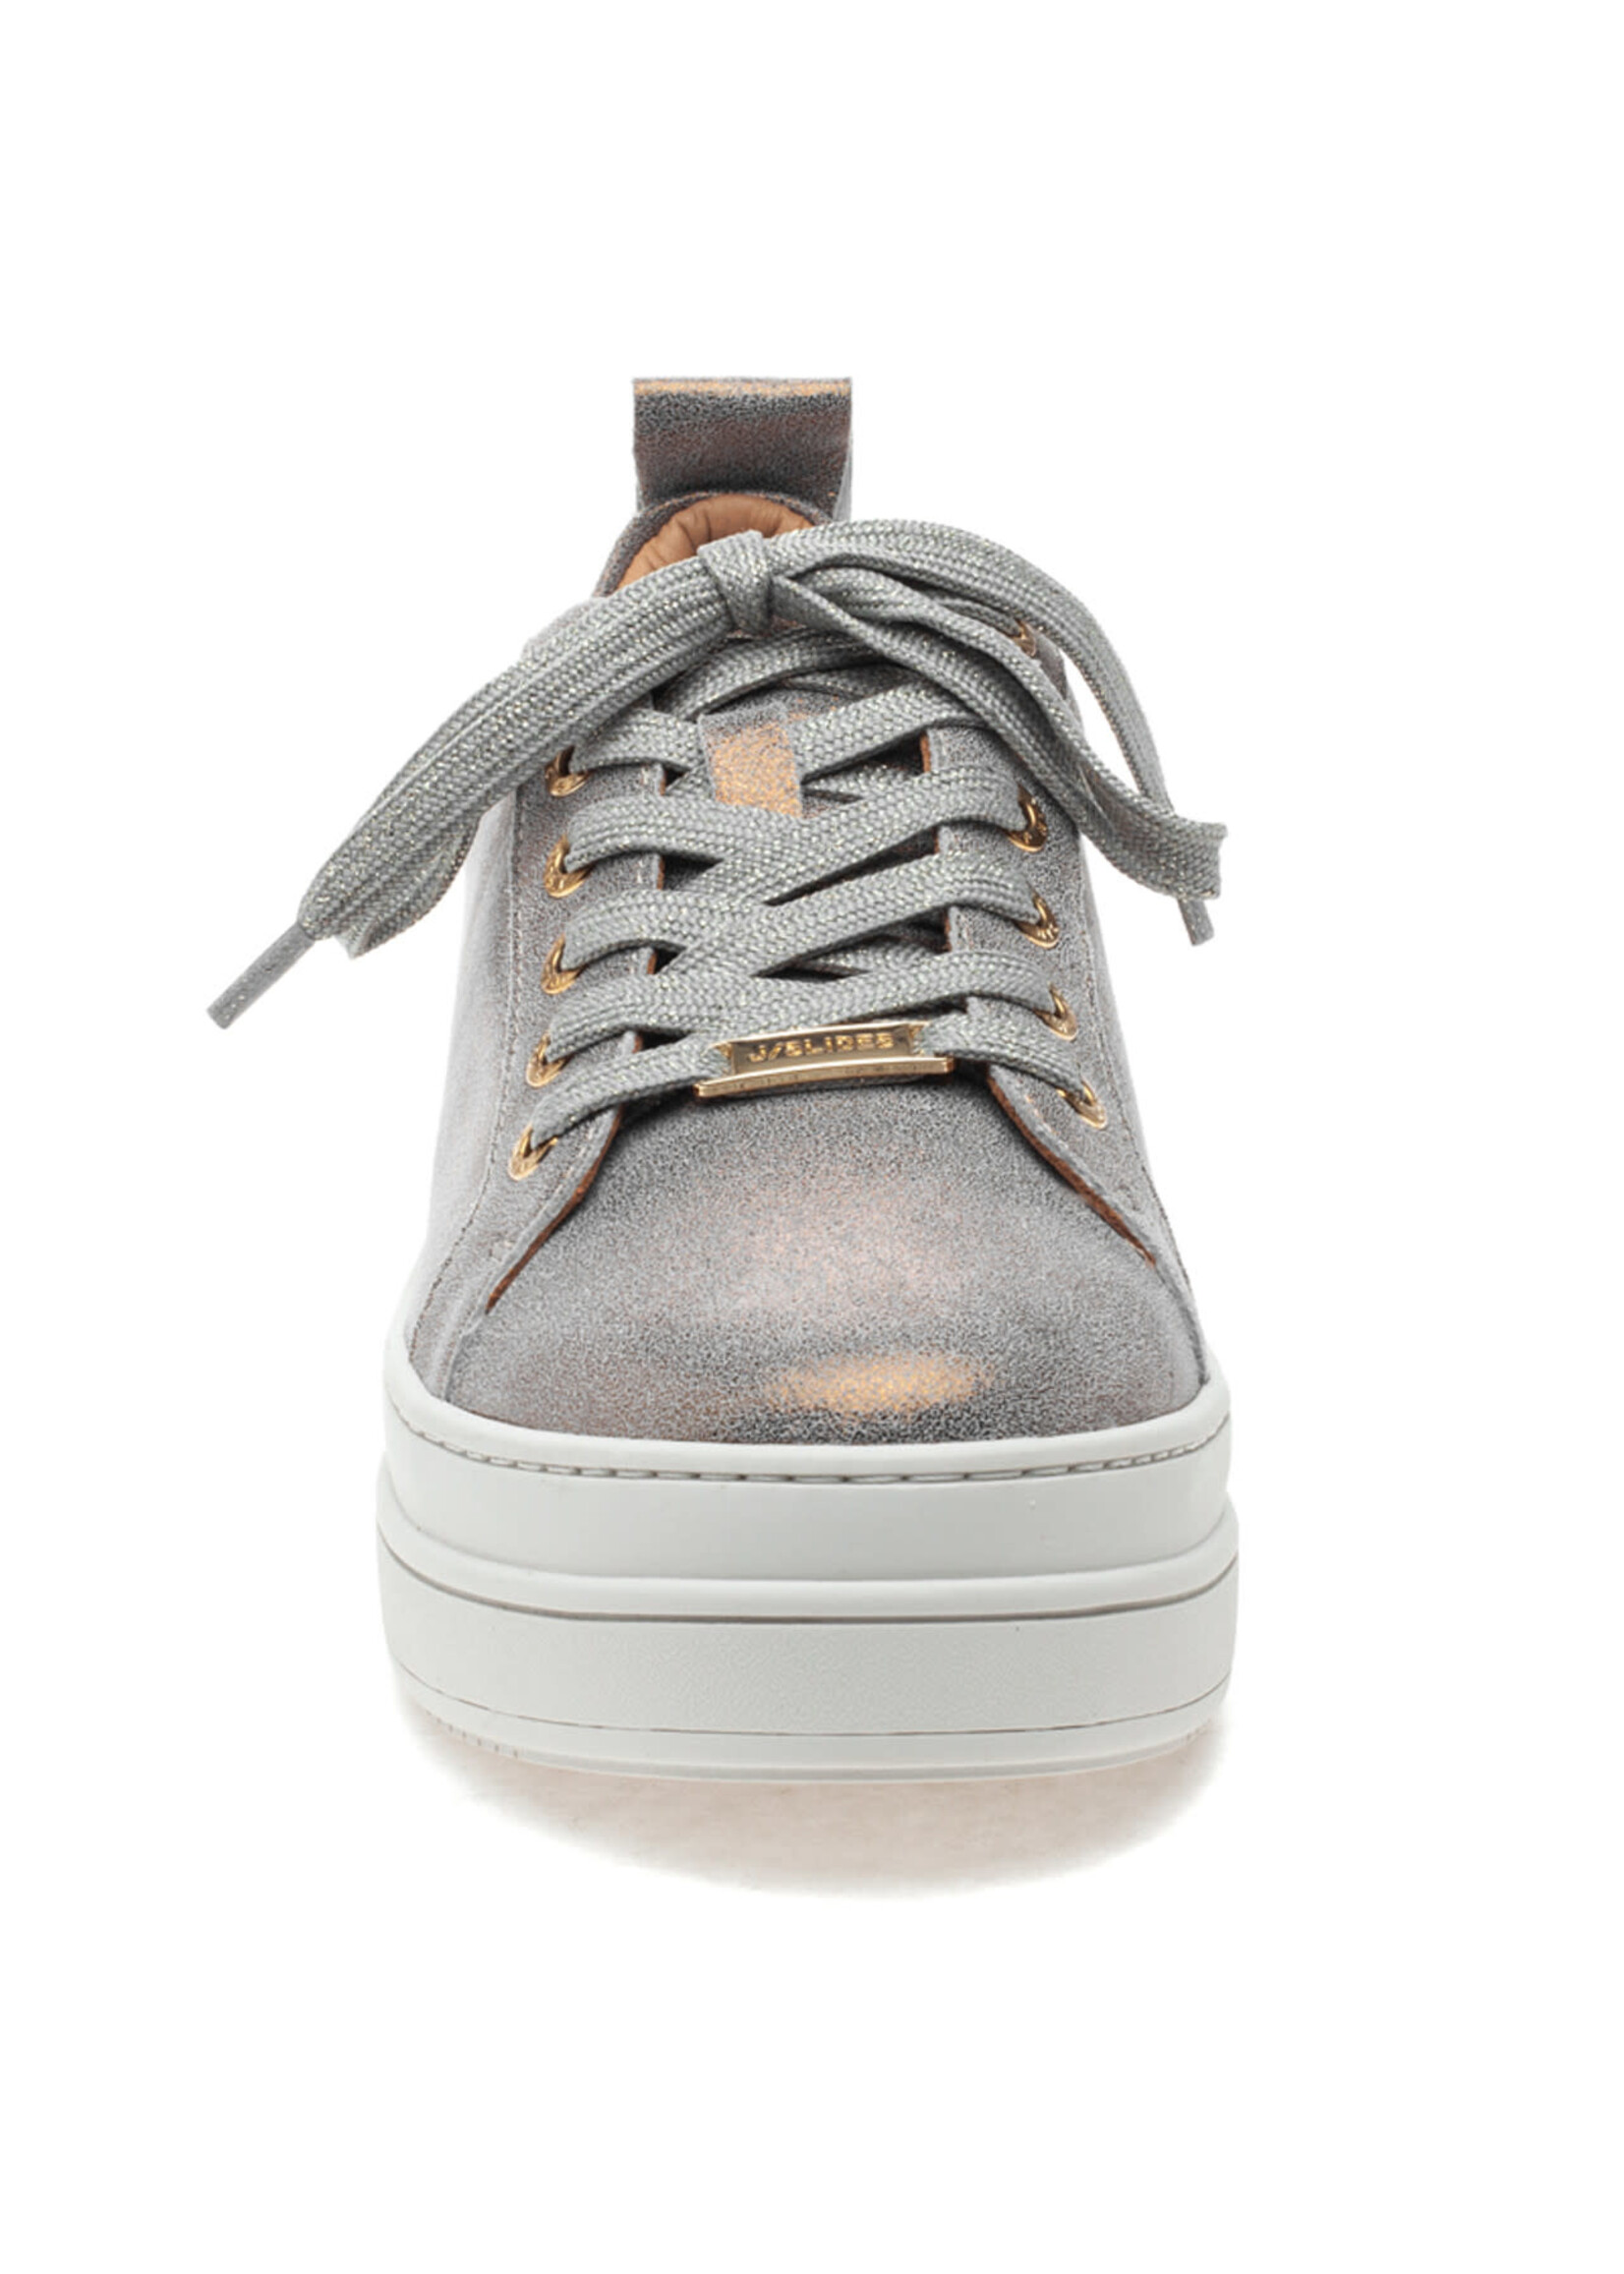 JSlides NYC NOCA Bronze Metallic Leather Sneaker by JSlides NYC